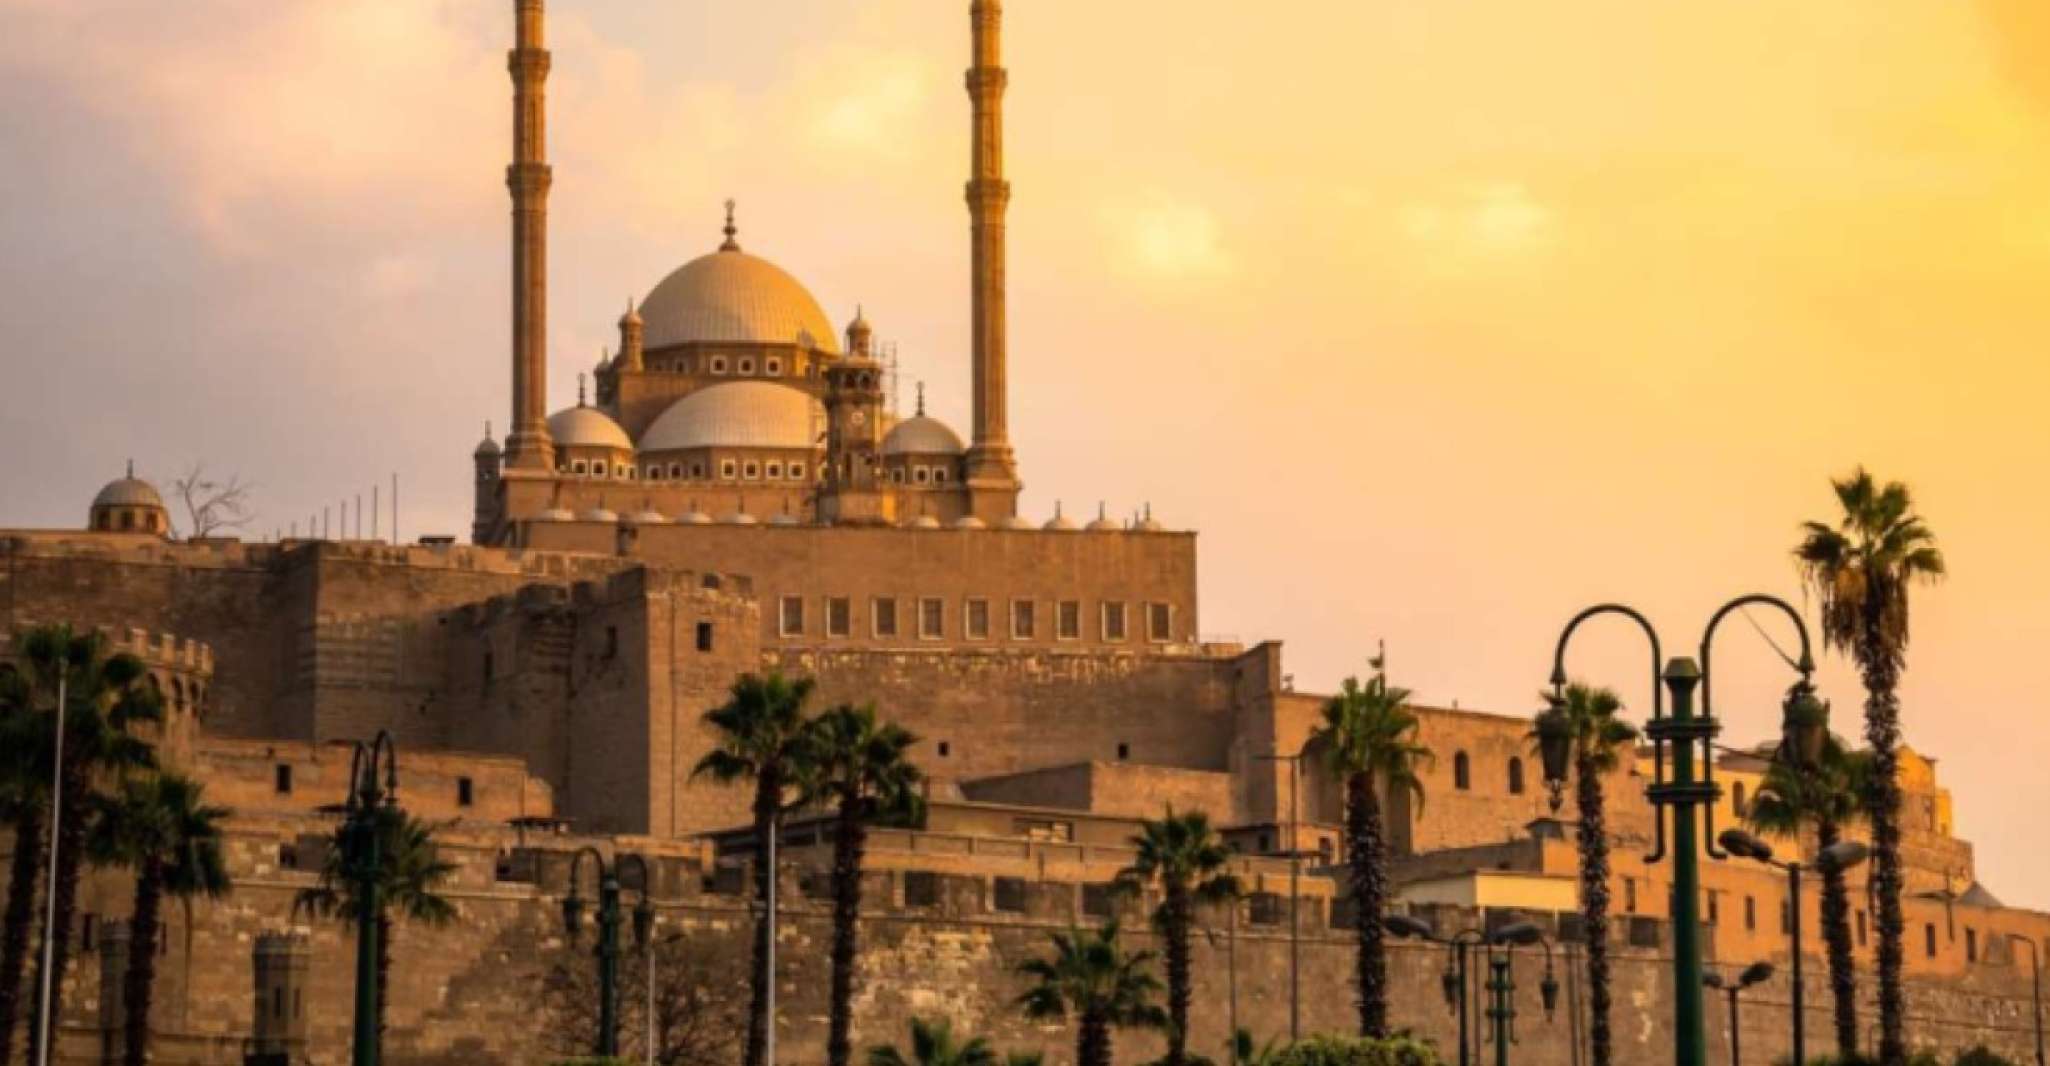 Citadel of Salah El Din & Mohamed Ali Mosque - Housity